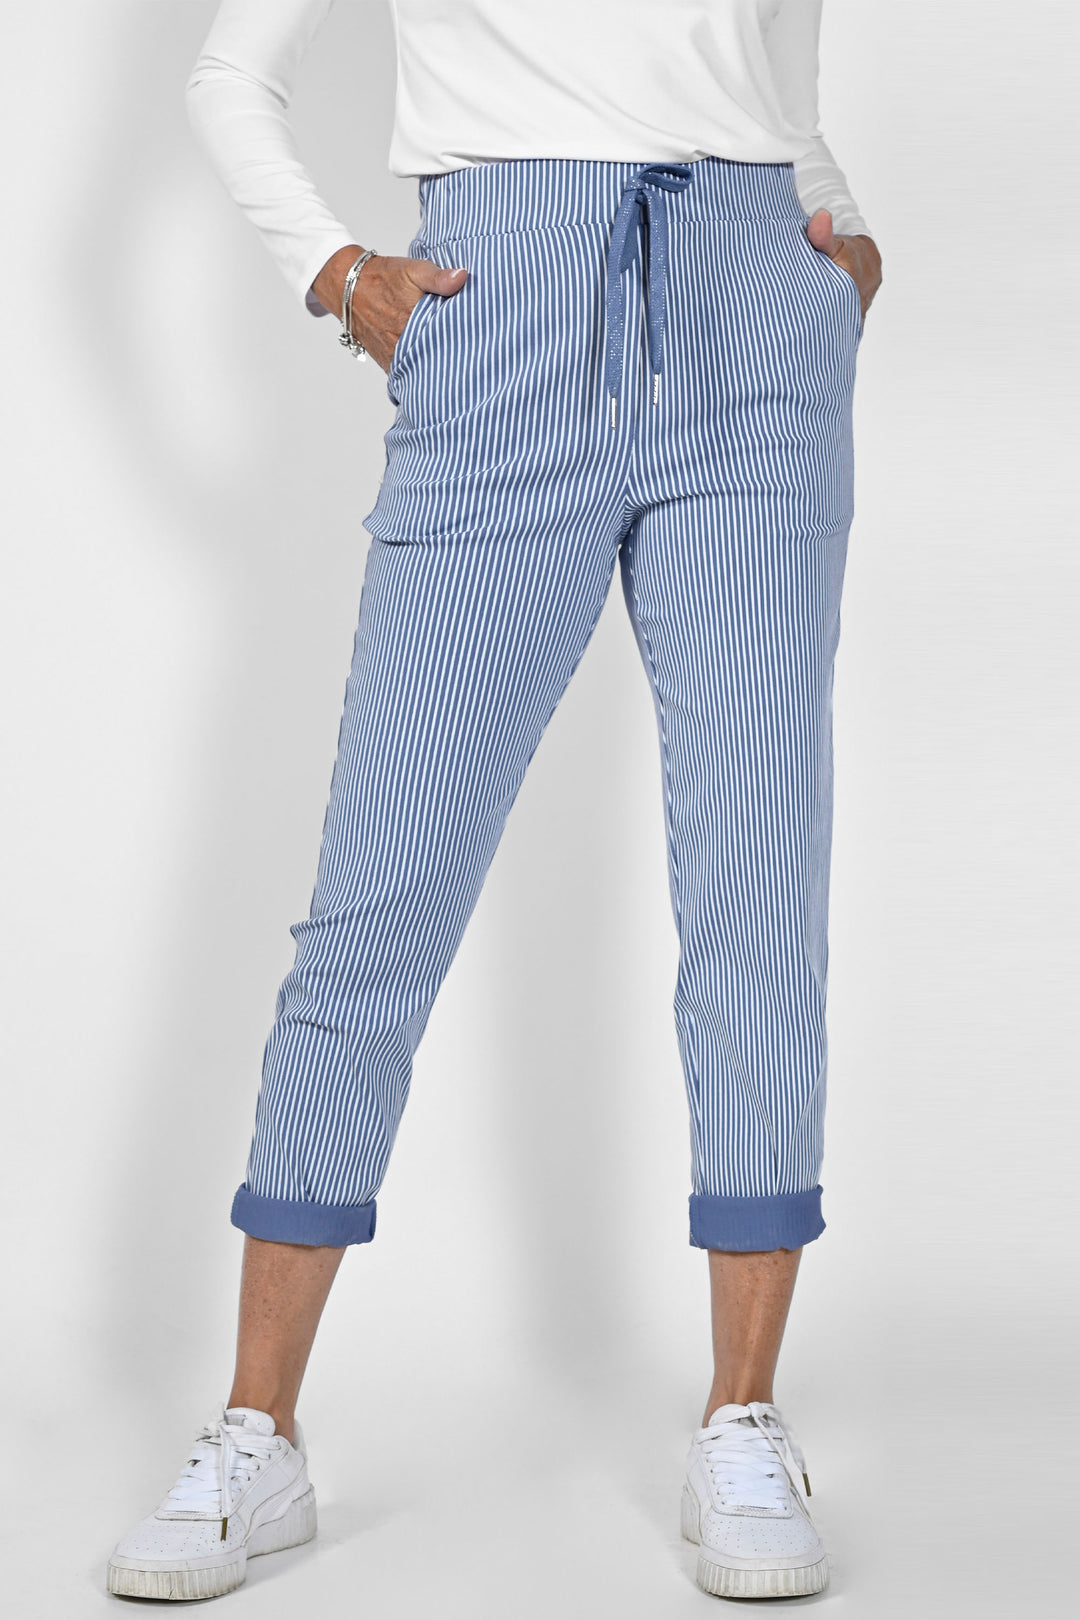 Frank Lyman Spring 2023 women's casual loungewear jogger pants - front